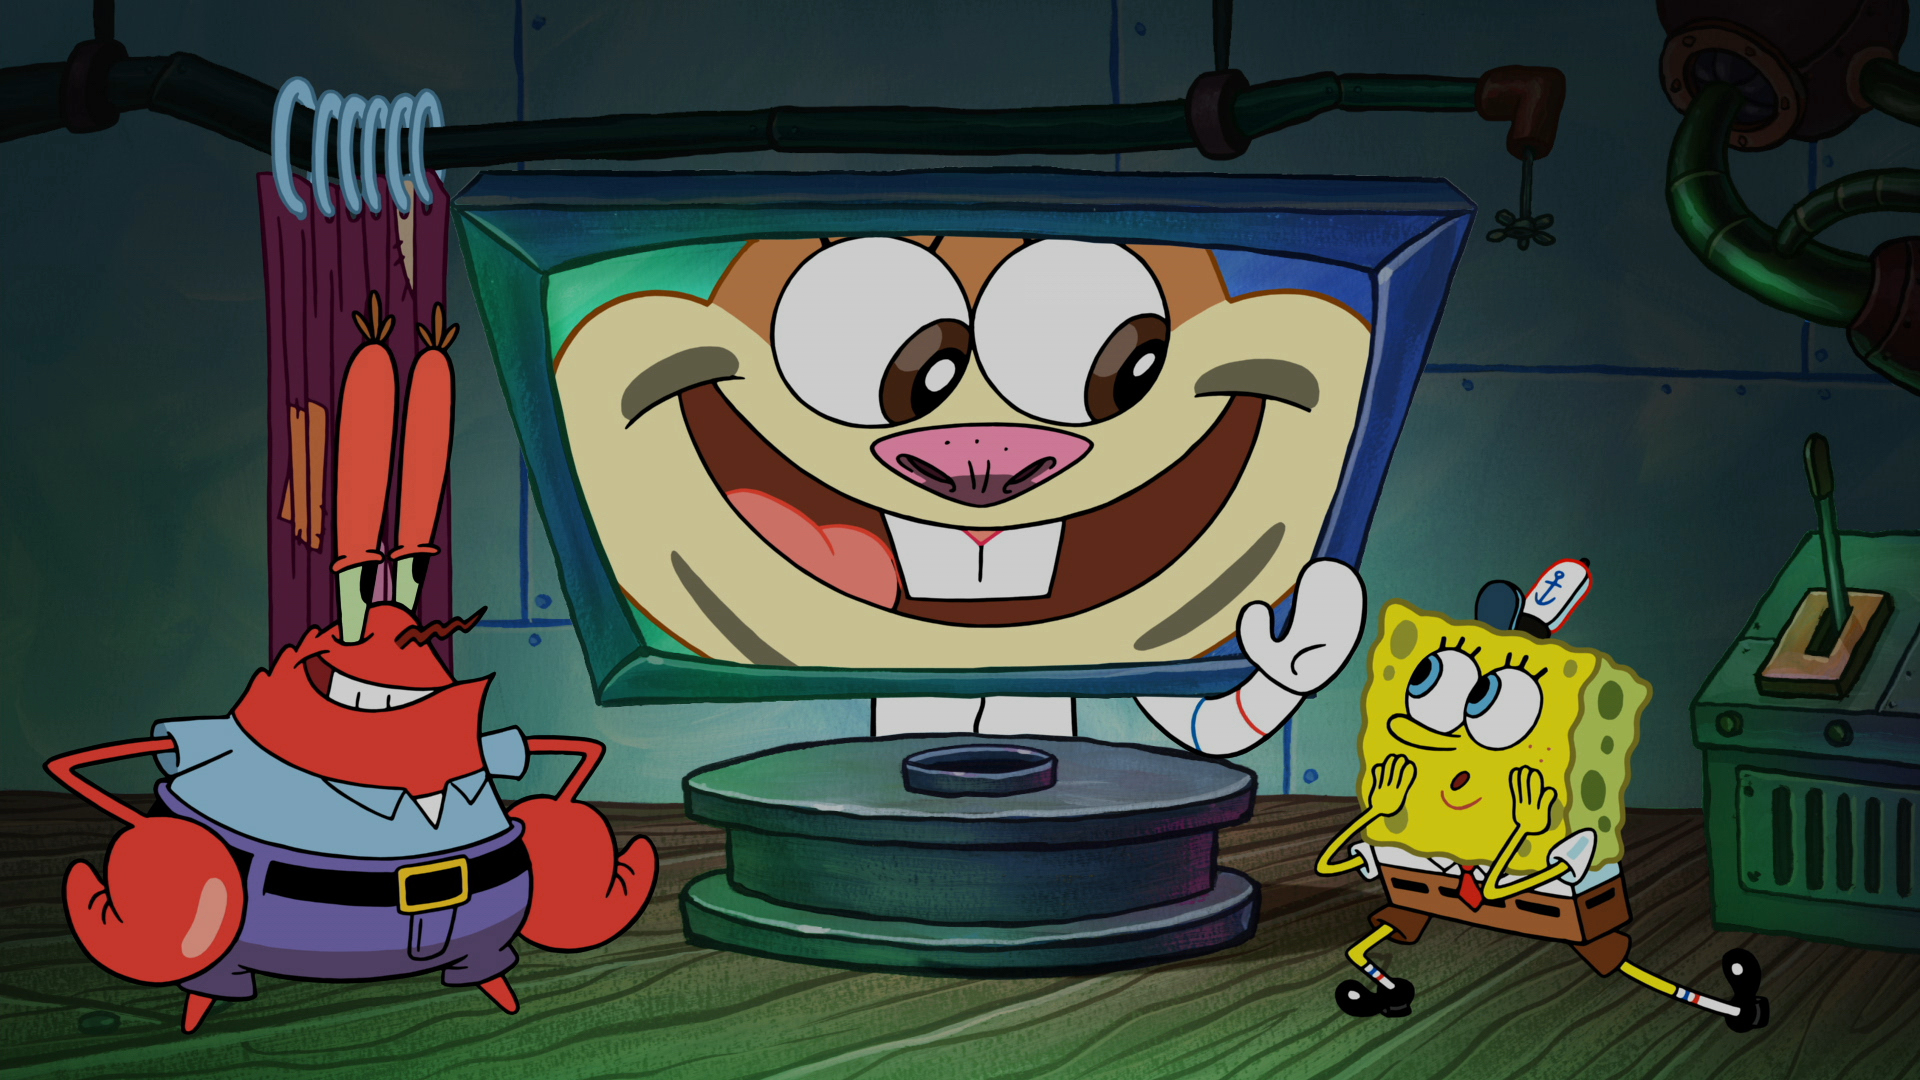 watch spongebob squarepants free online full episodes